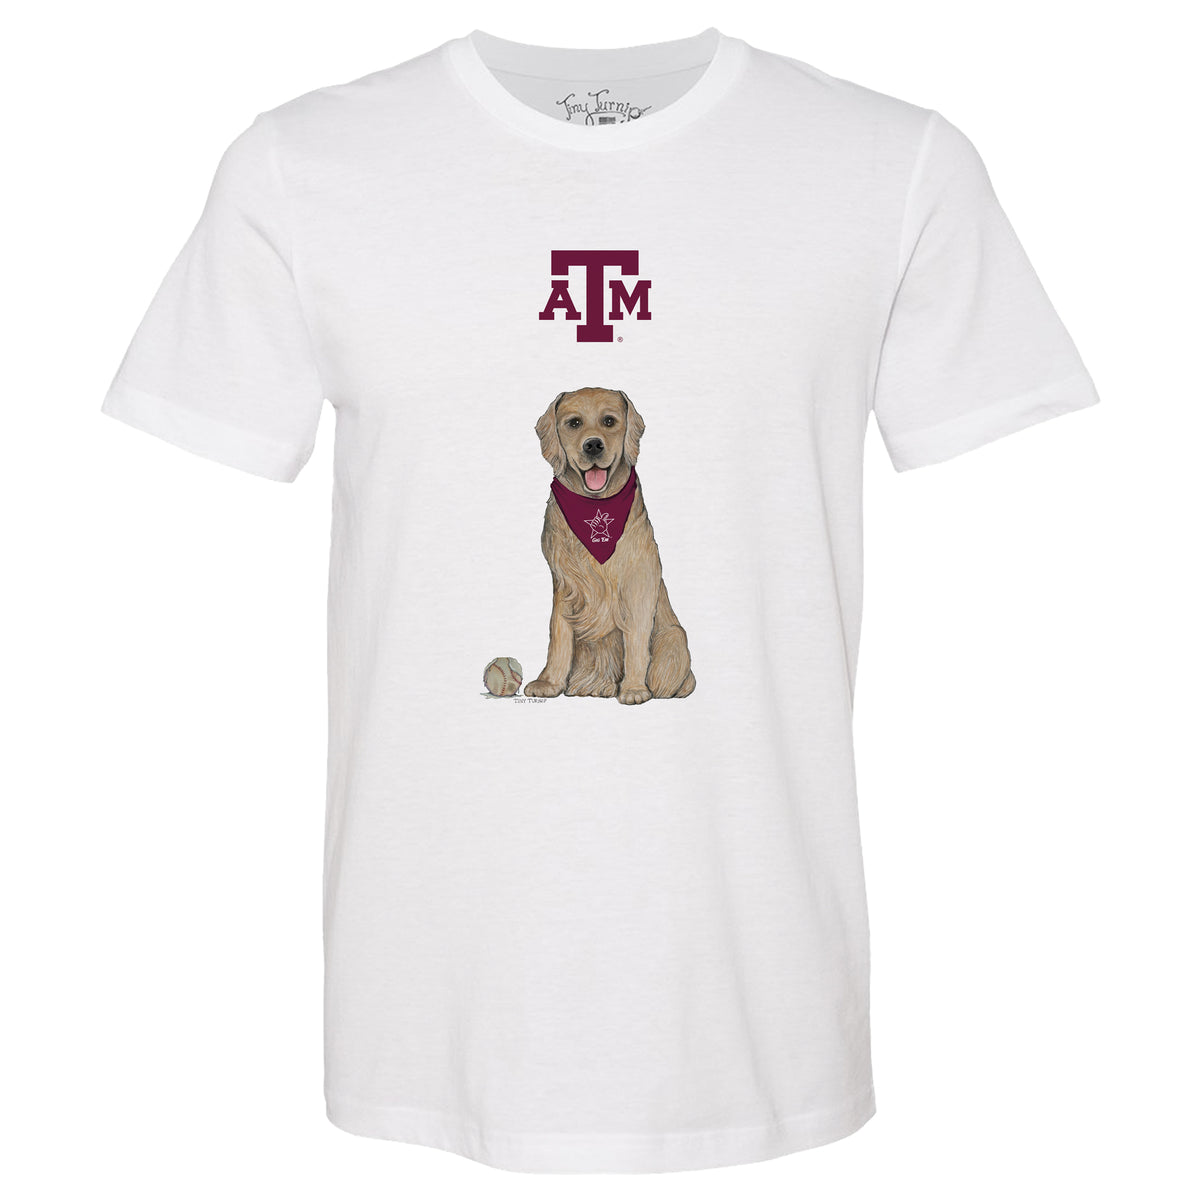 Texas A&M Aggies Golden Retriever Tee Shirt